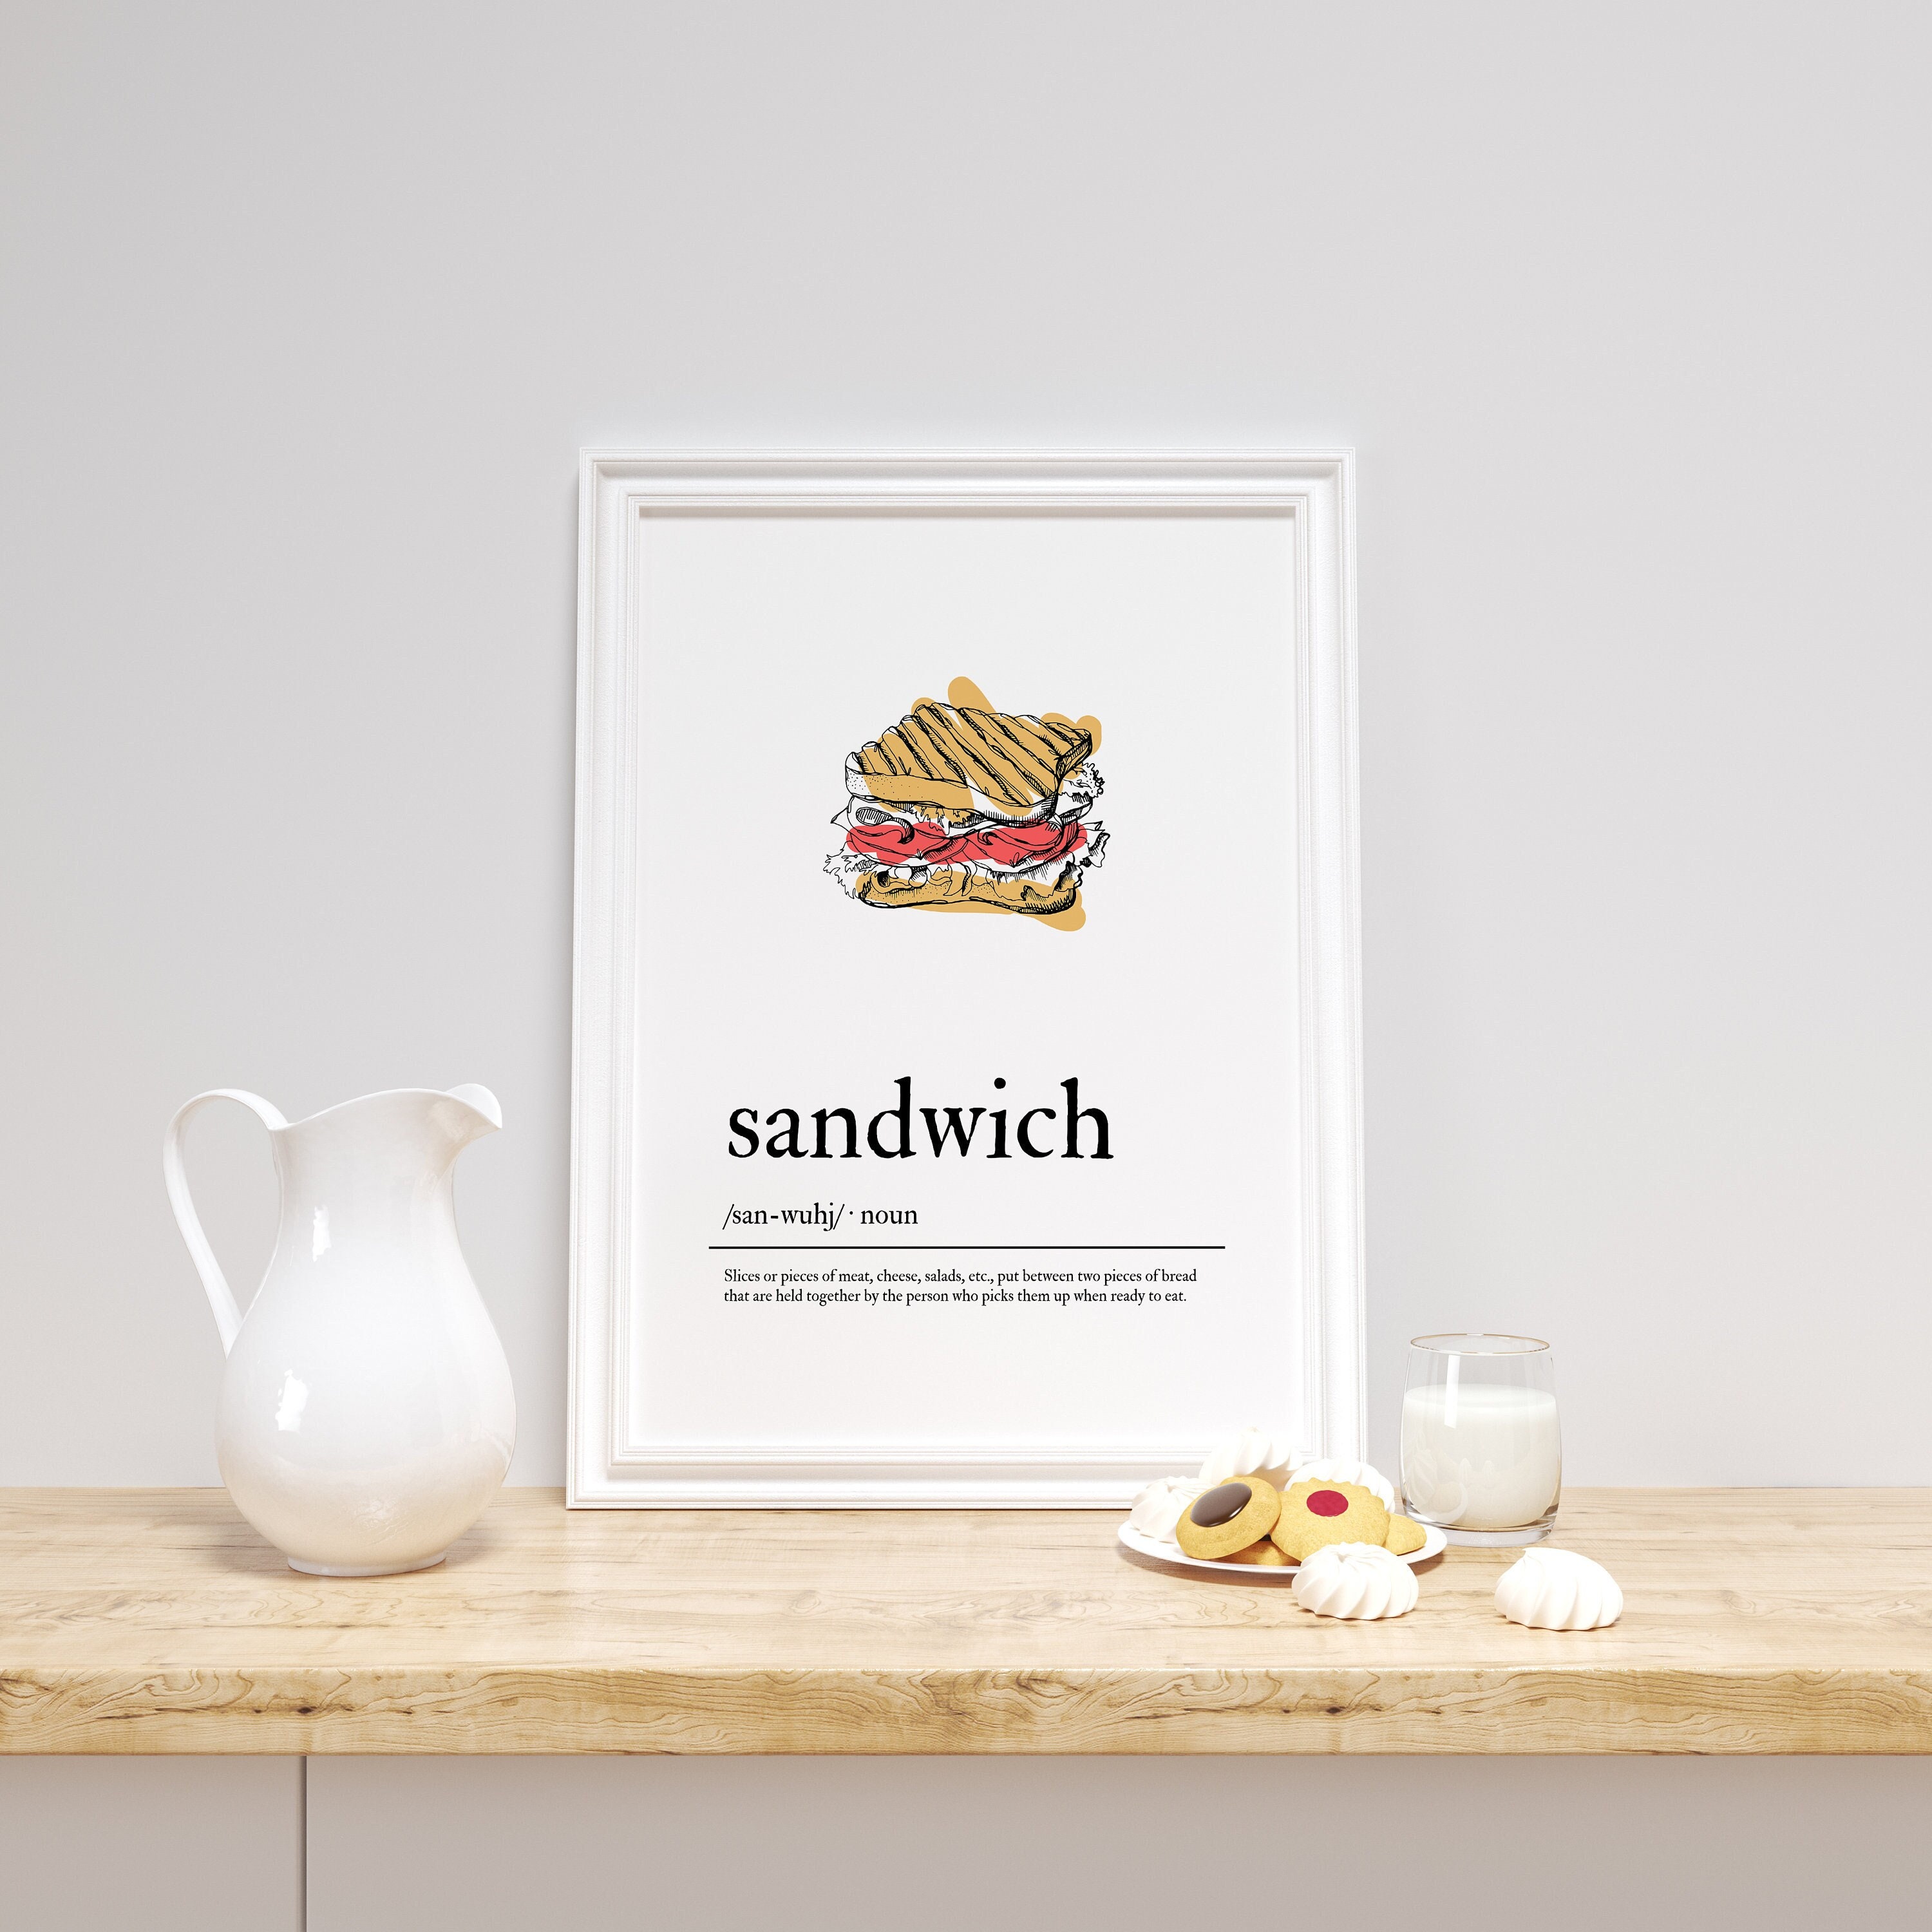 Sandwich definition kitchen for sale  